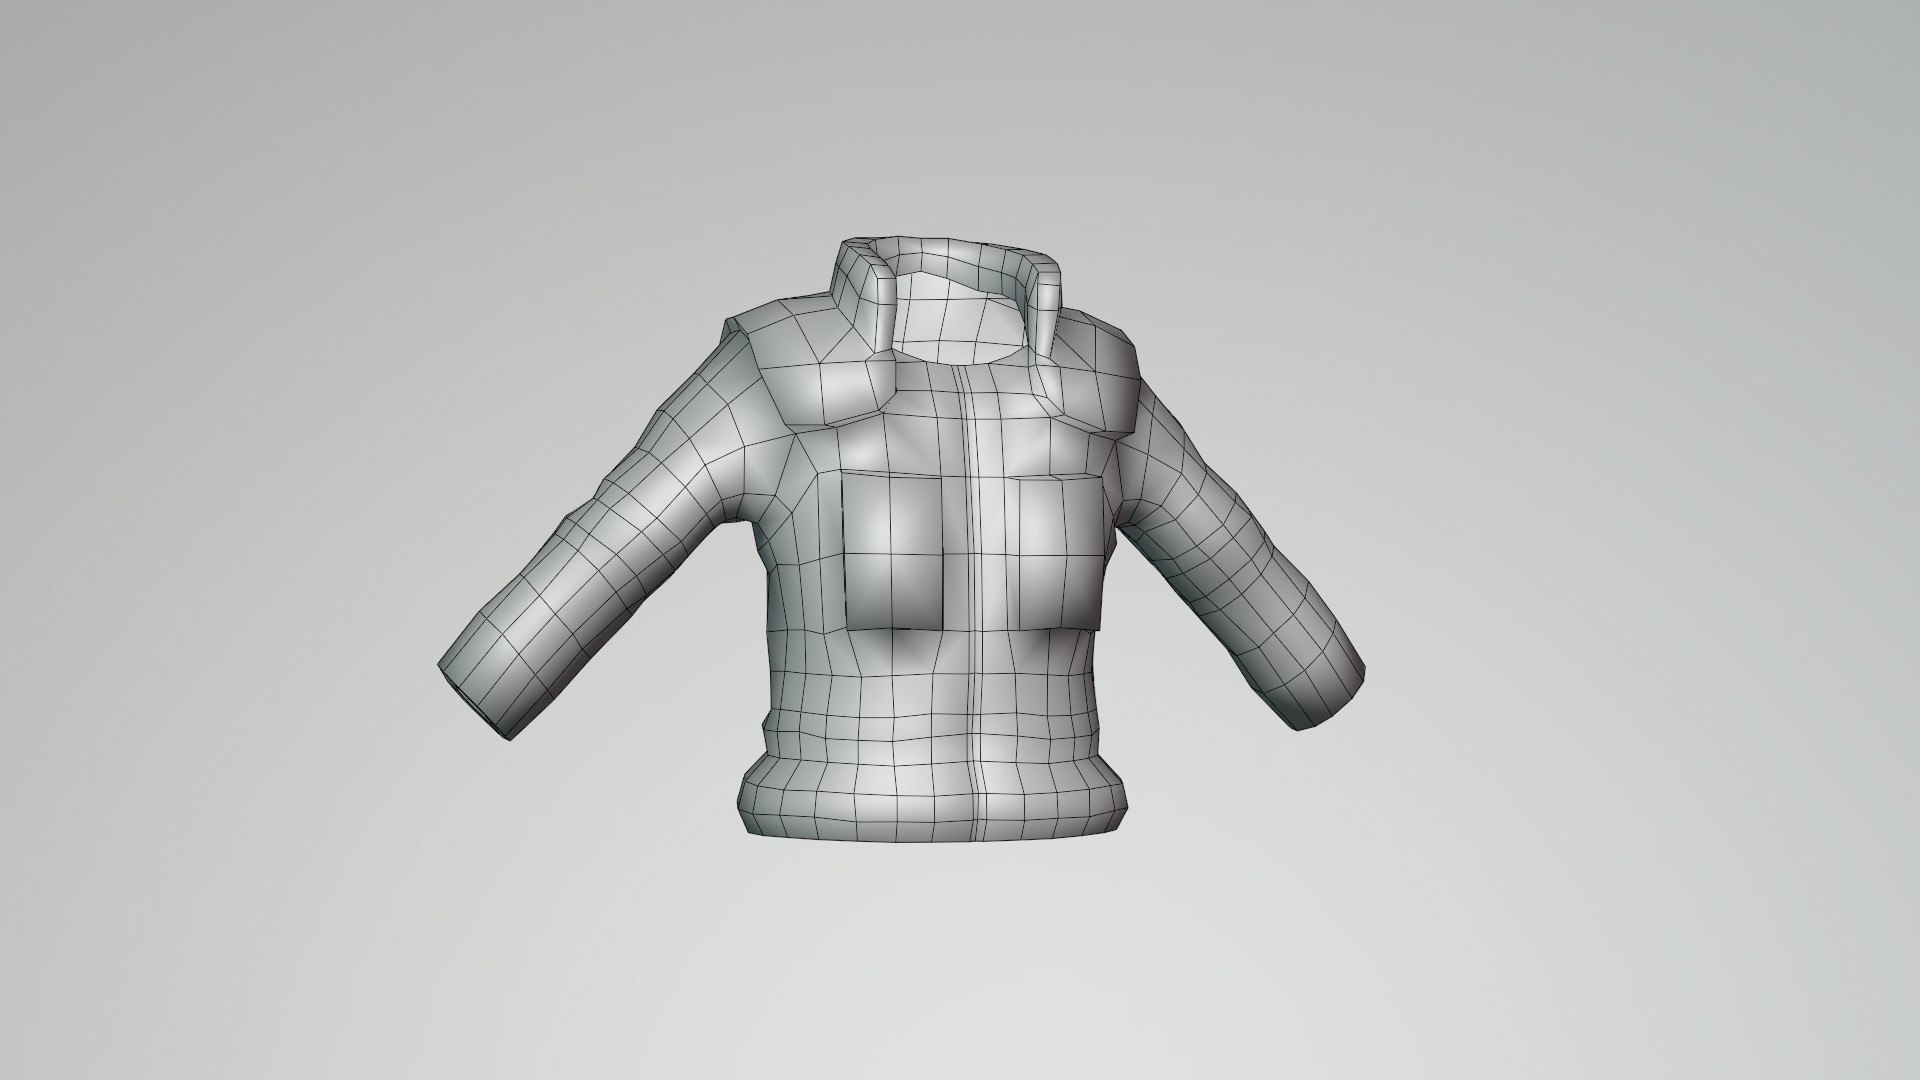 Kakashi Jacket - Clothing - Low poly 3D model - TurboSquid 1882112